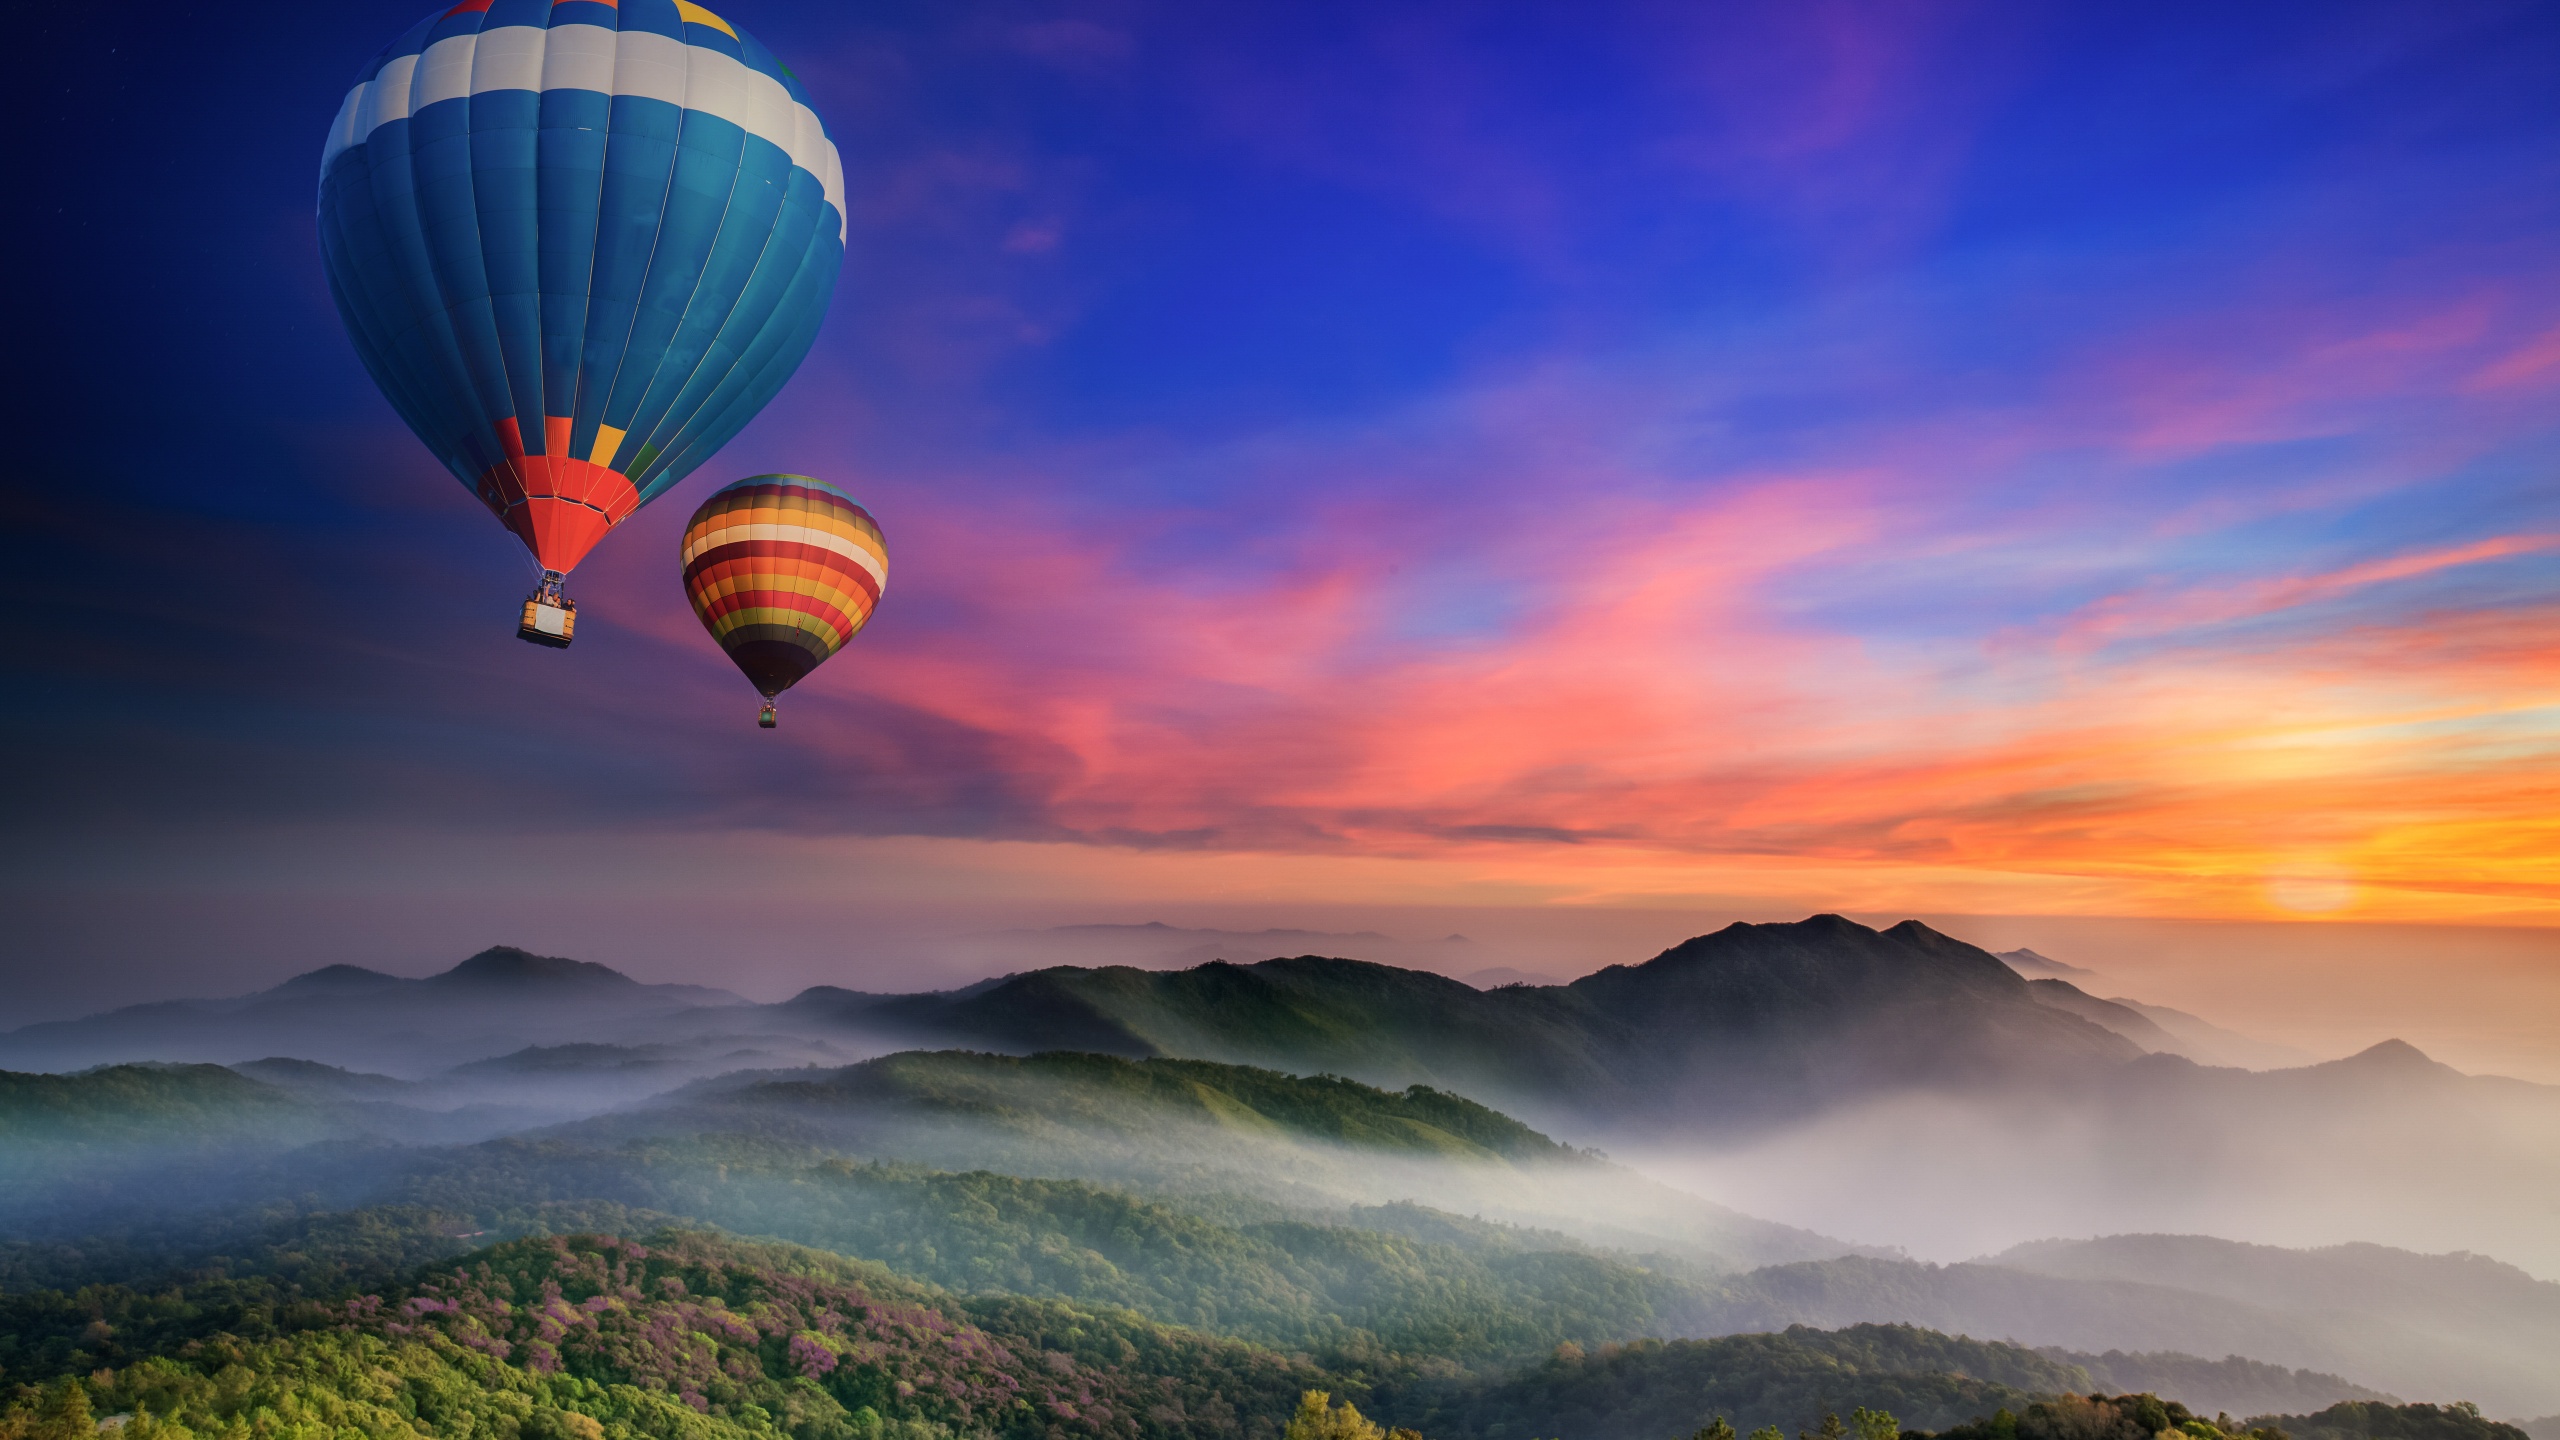 Hot air balloons 4K Wallpaper, Doi Inthanon National Park, Sunrise